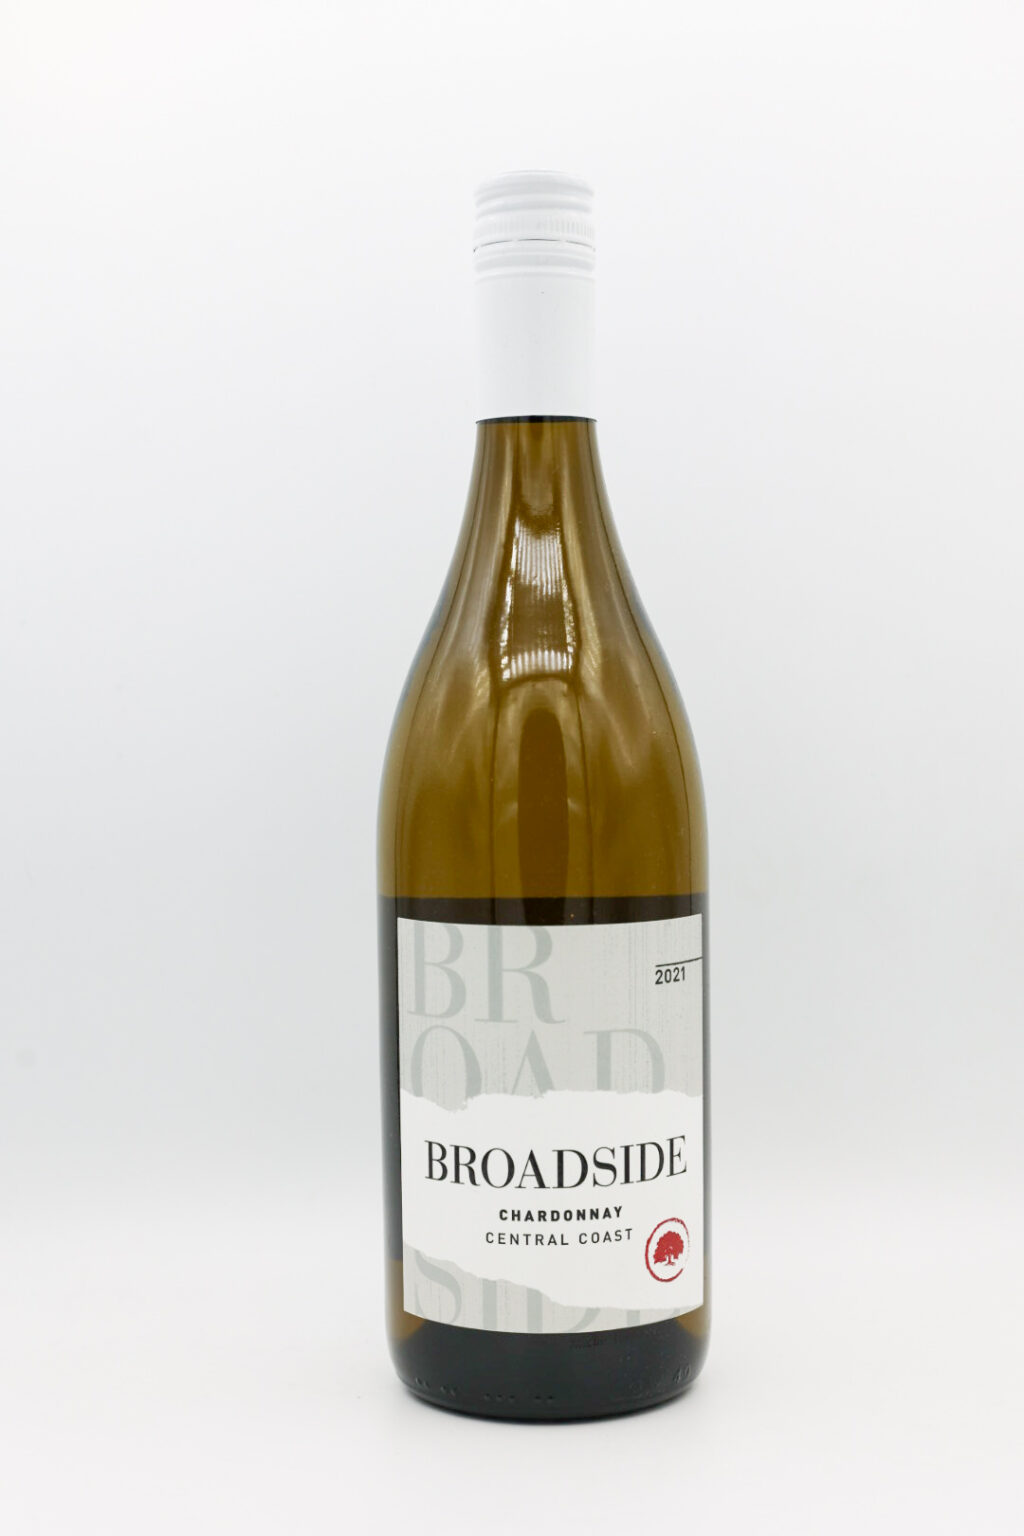 Broadside Central Coast Chardonnay 2020